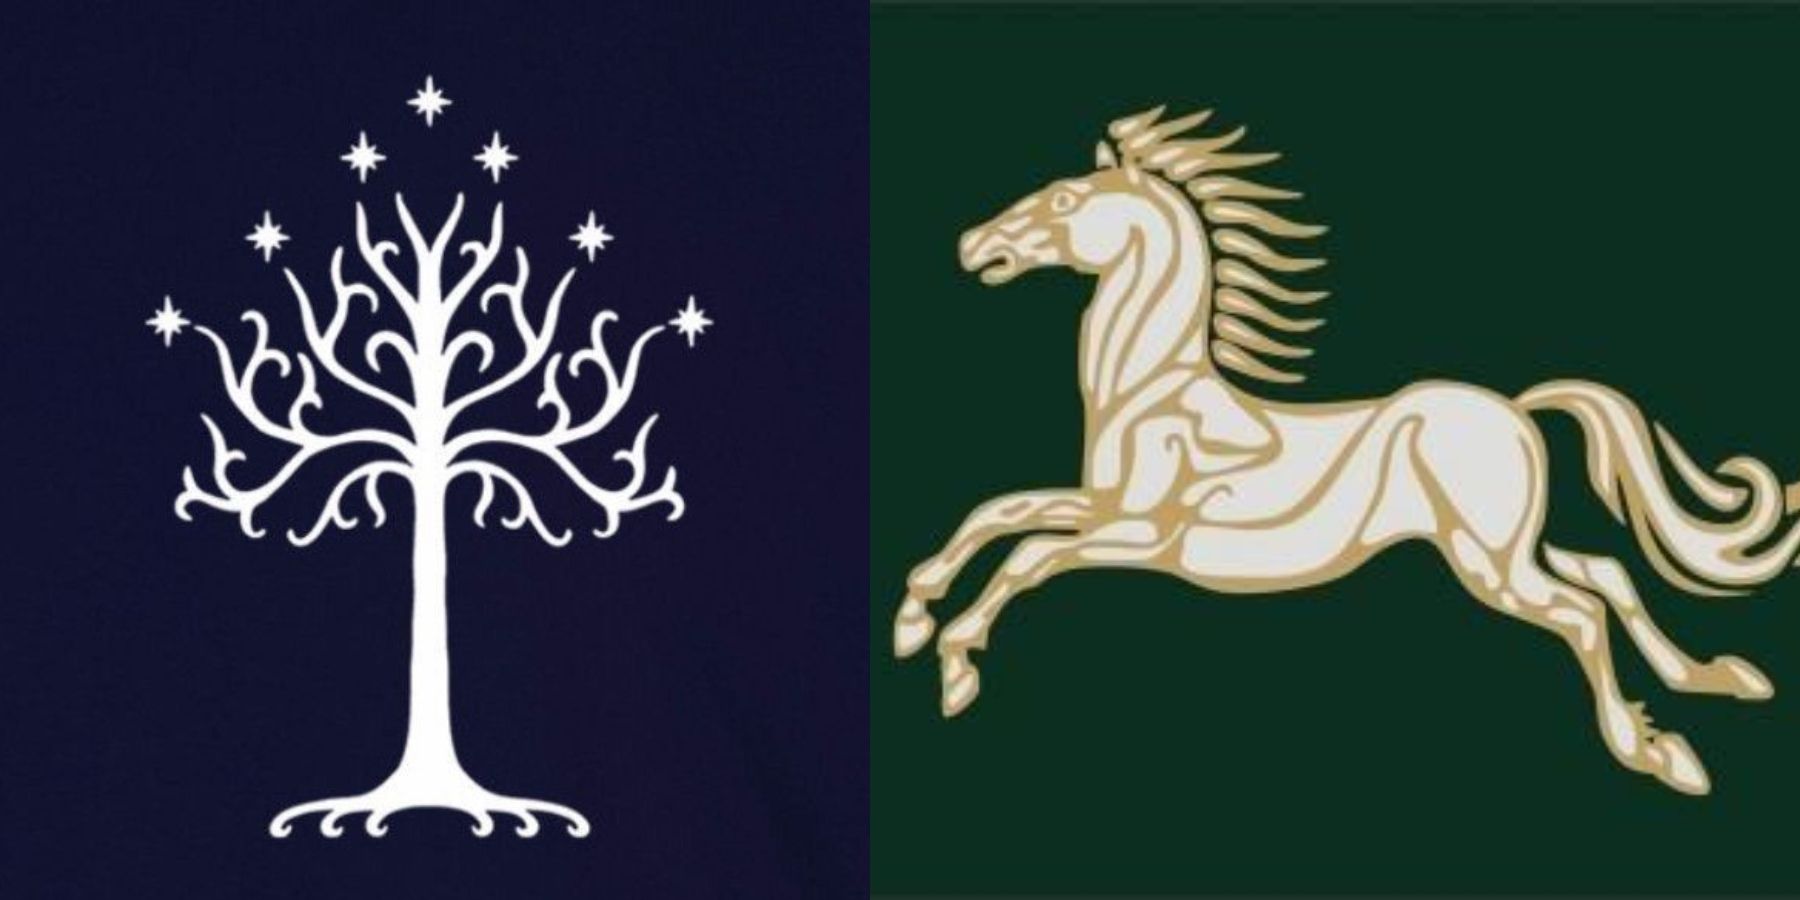 Gondor and Rohan crests